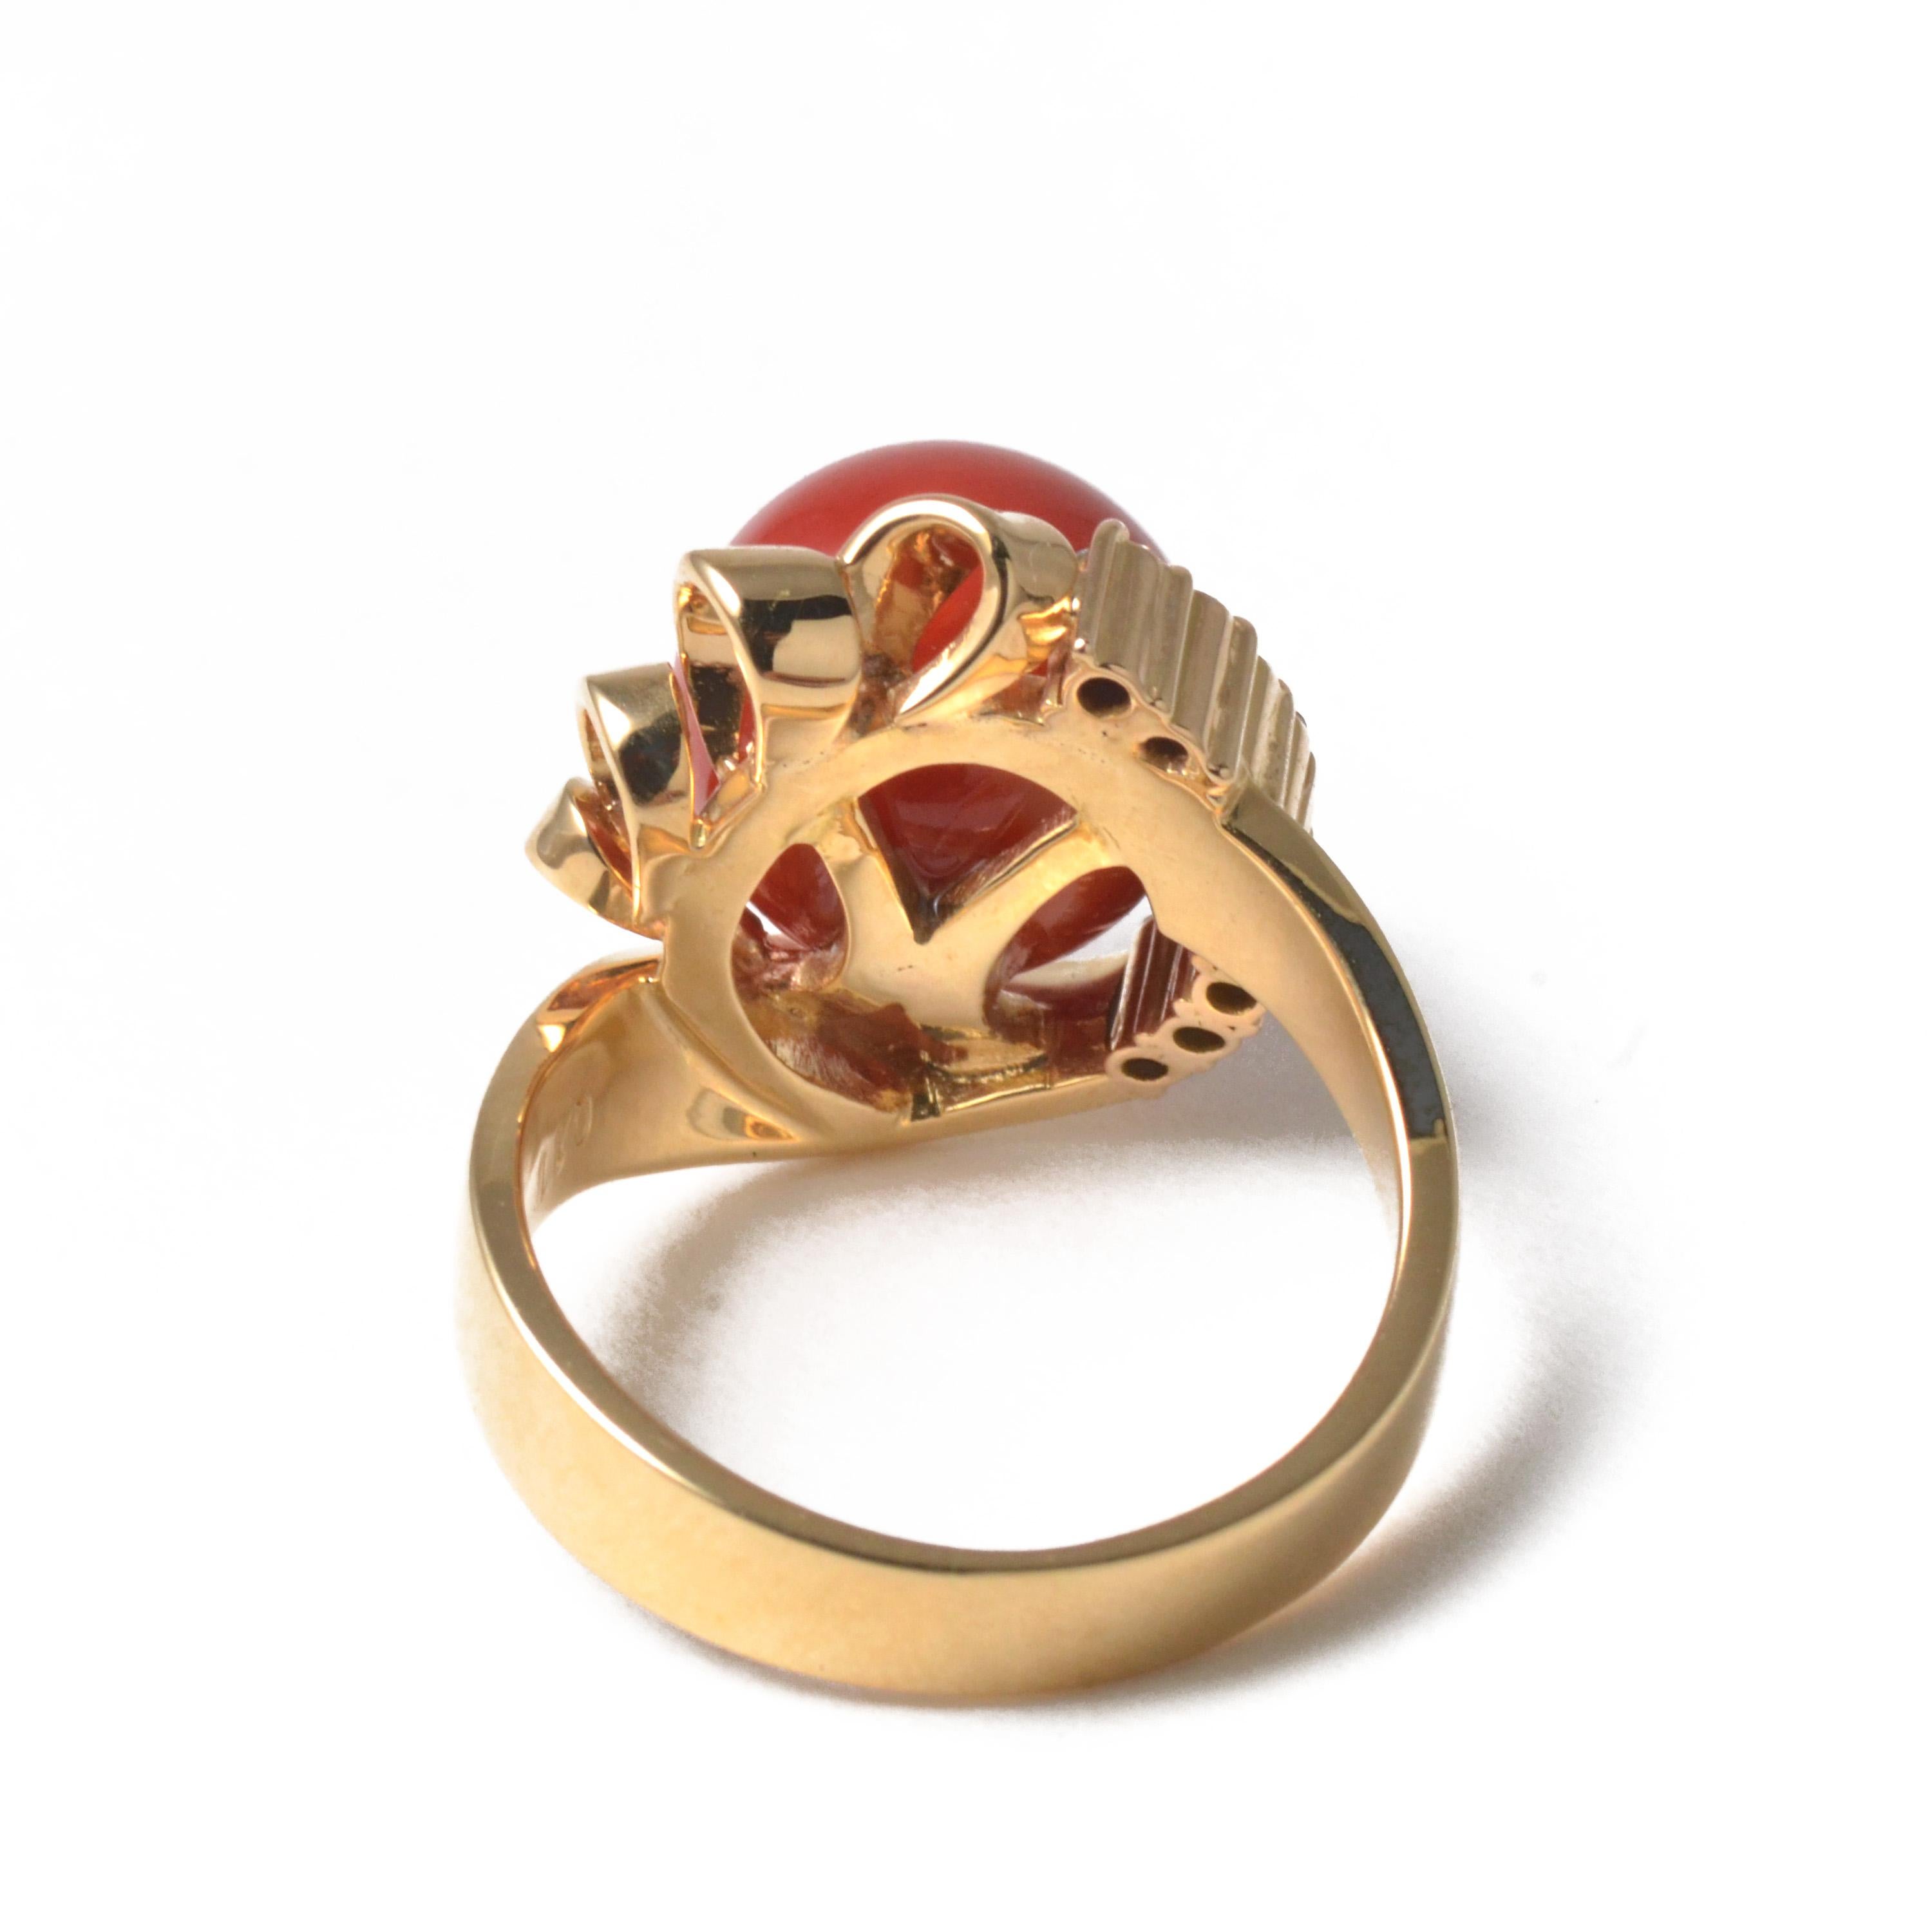 18 Karat Yellow Gold Vintage Oxblood Coral Ring with Diamonds 4